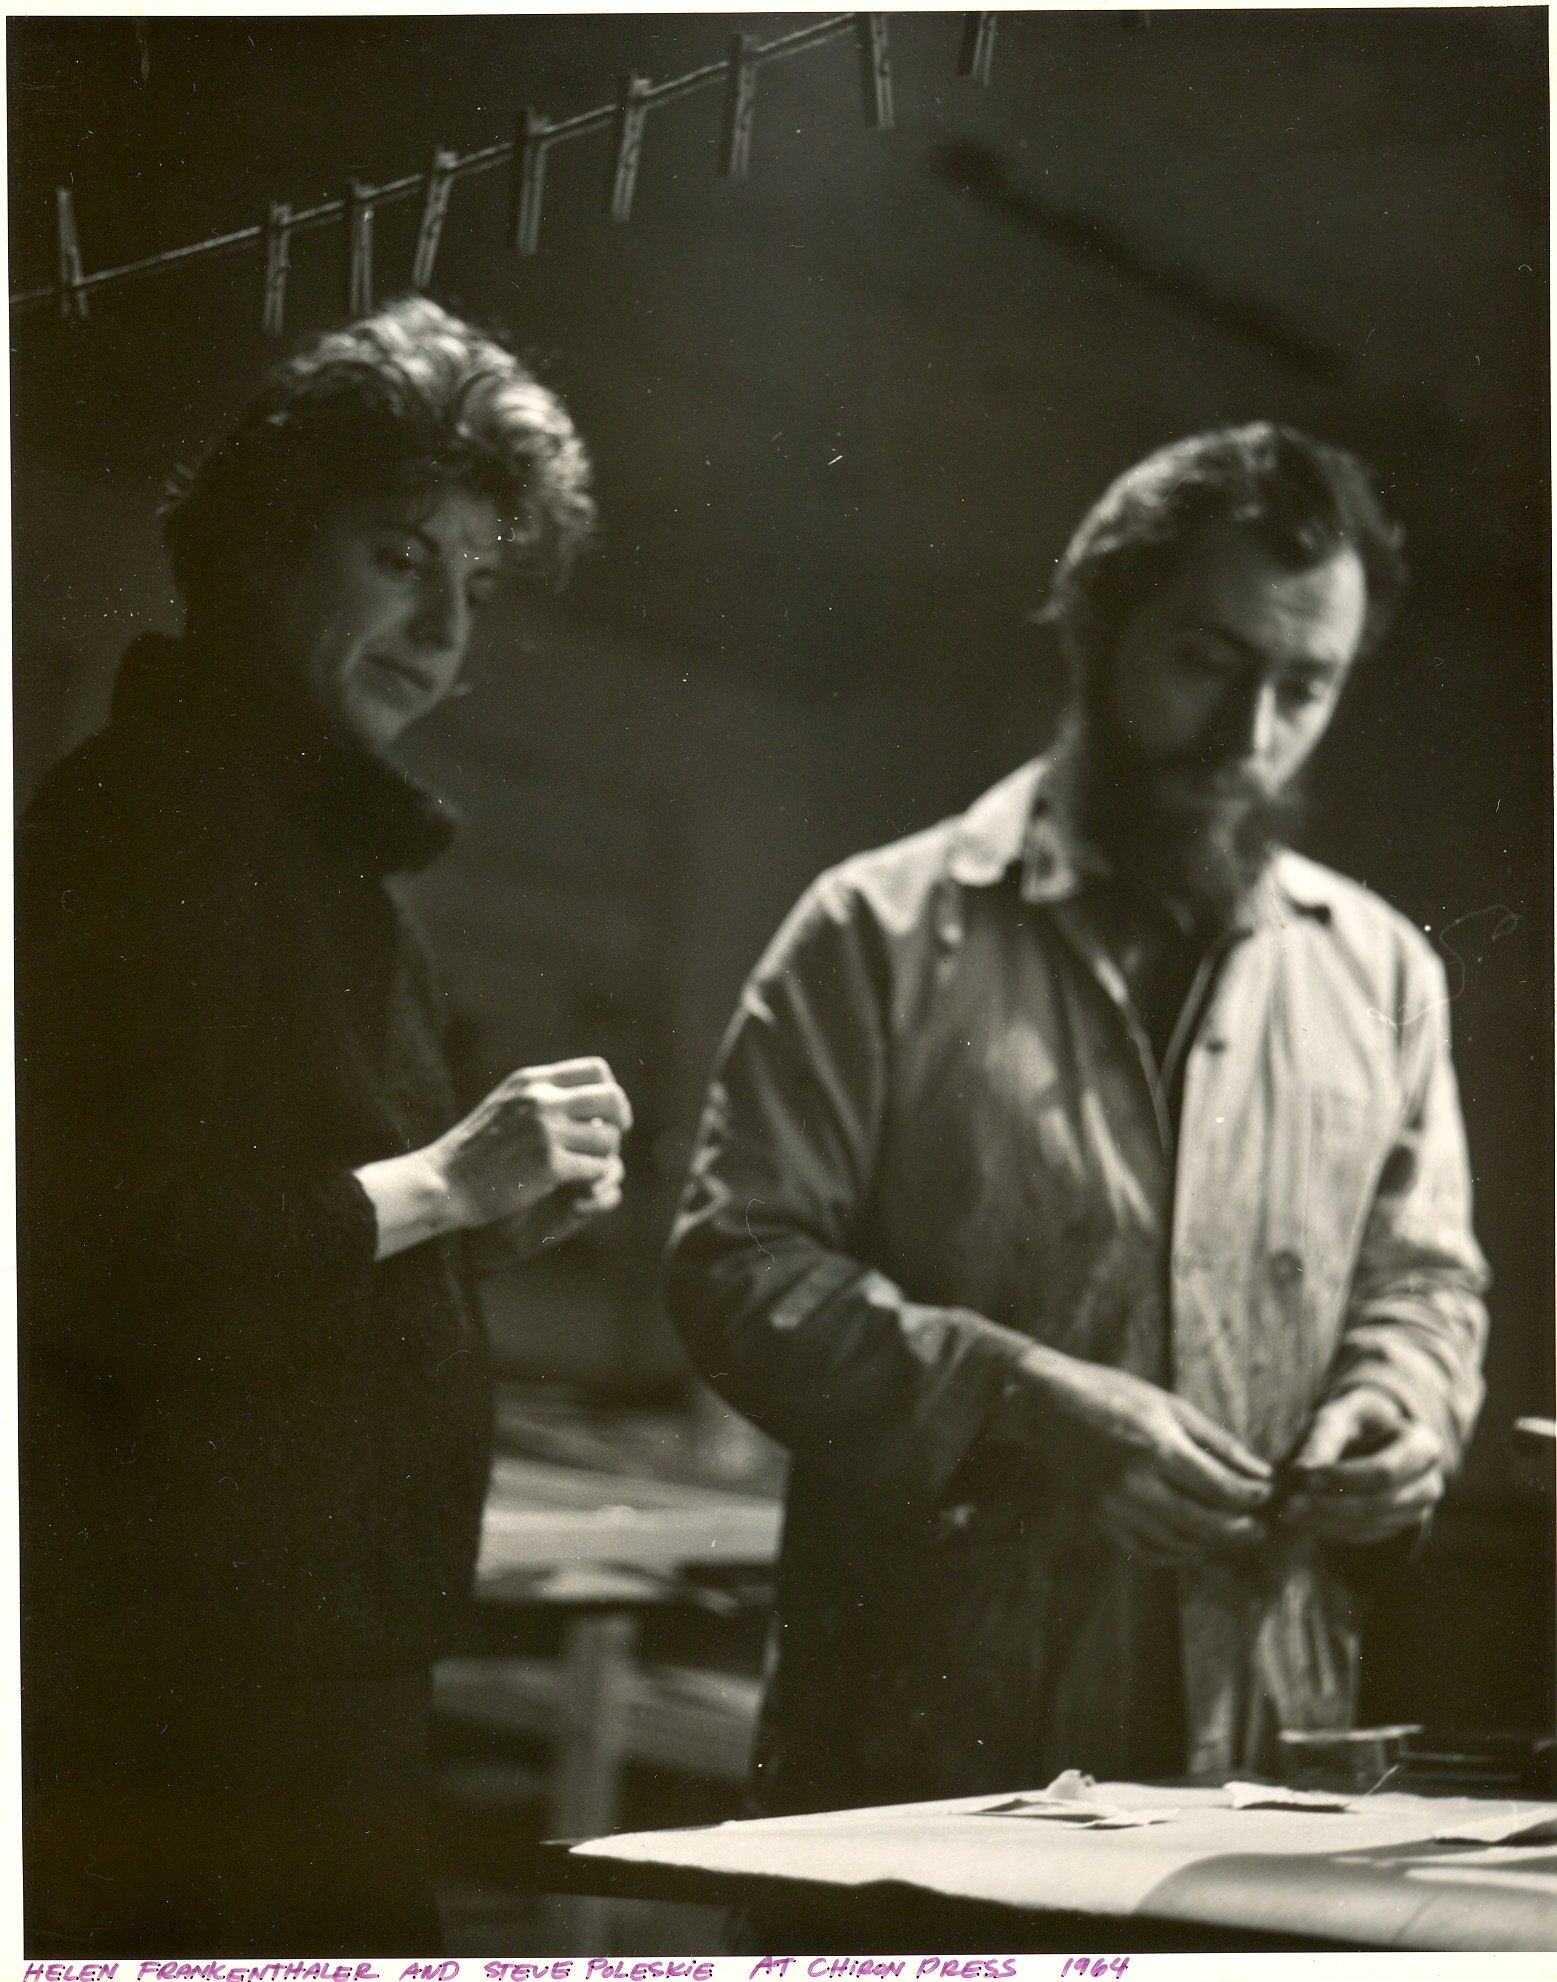 Artist Helen Frankenthaler (left) with Poleskie (right) at Chiron Press, 1964